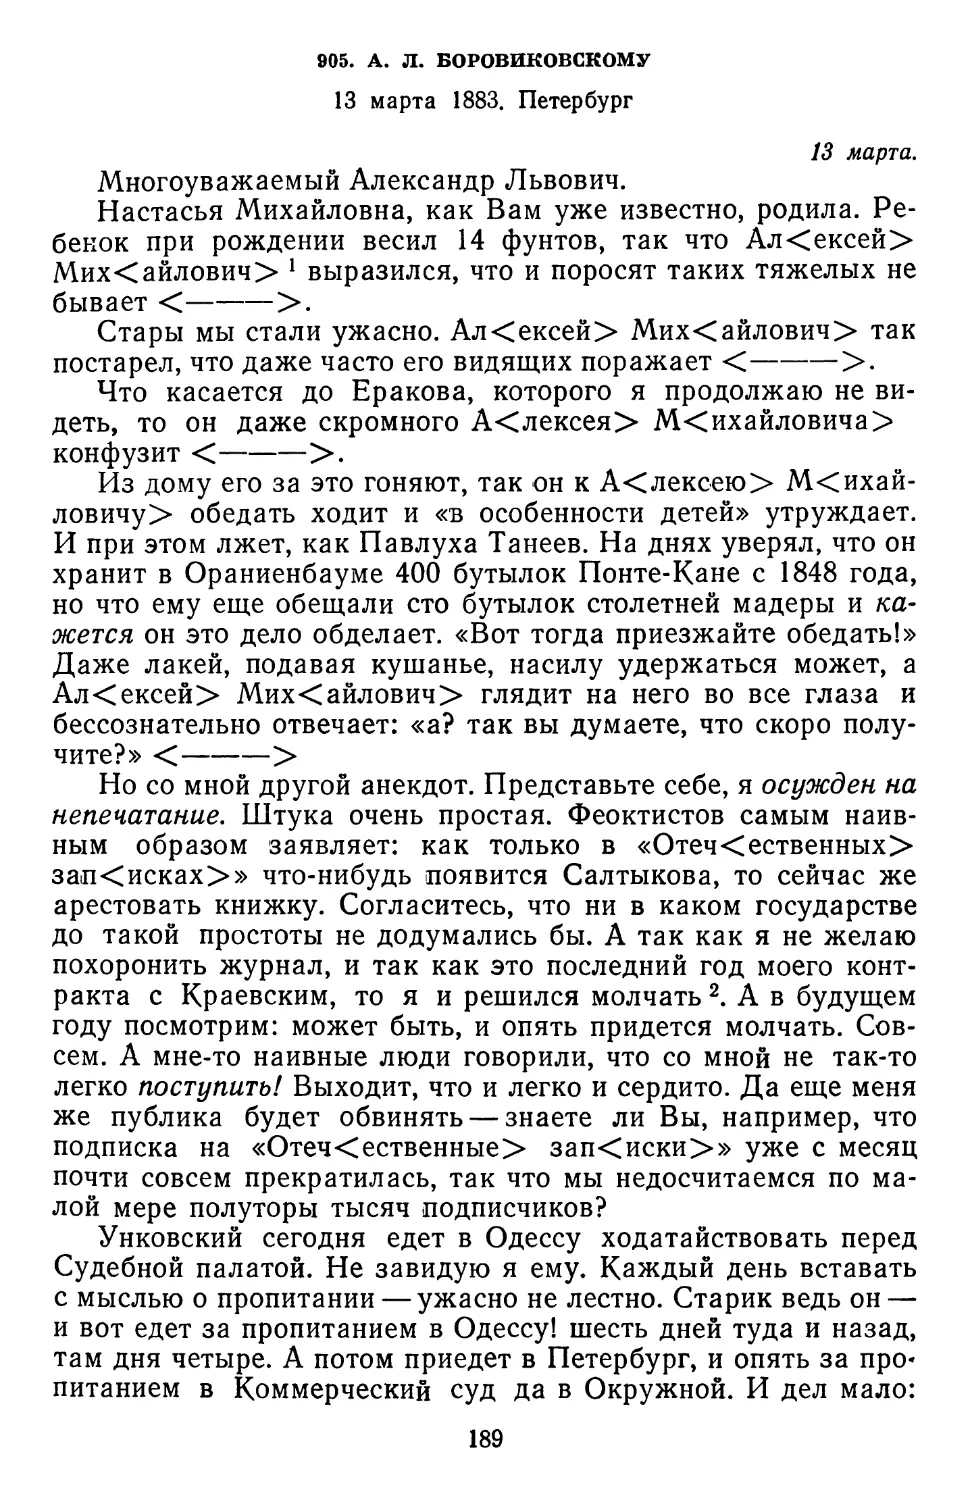 905.А. Л. Боровиковскому. 13 марта 1883. Петербург